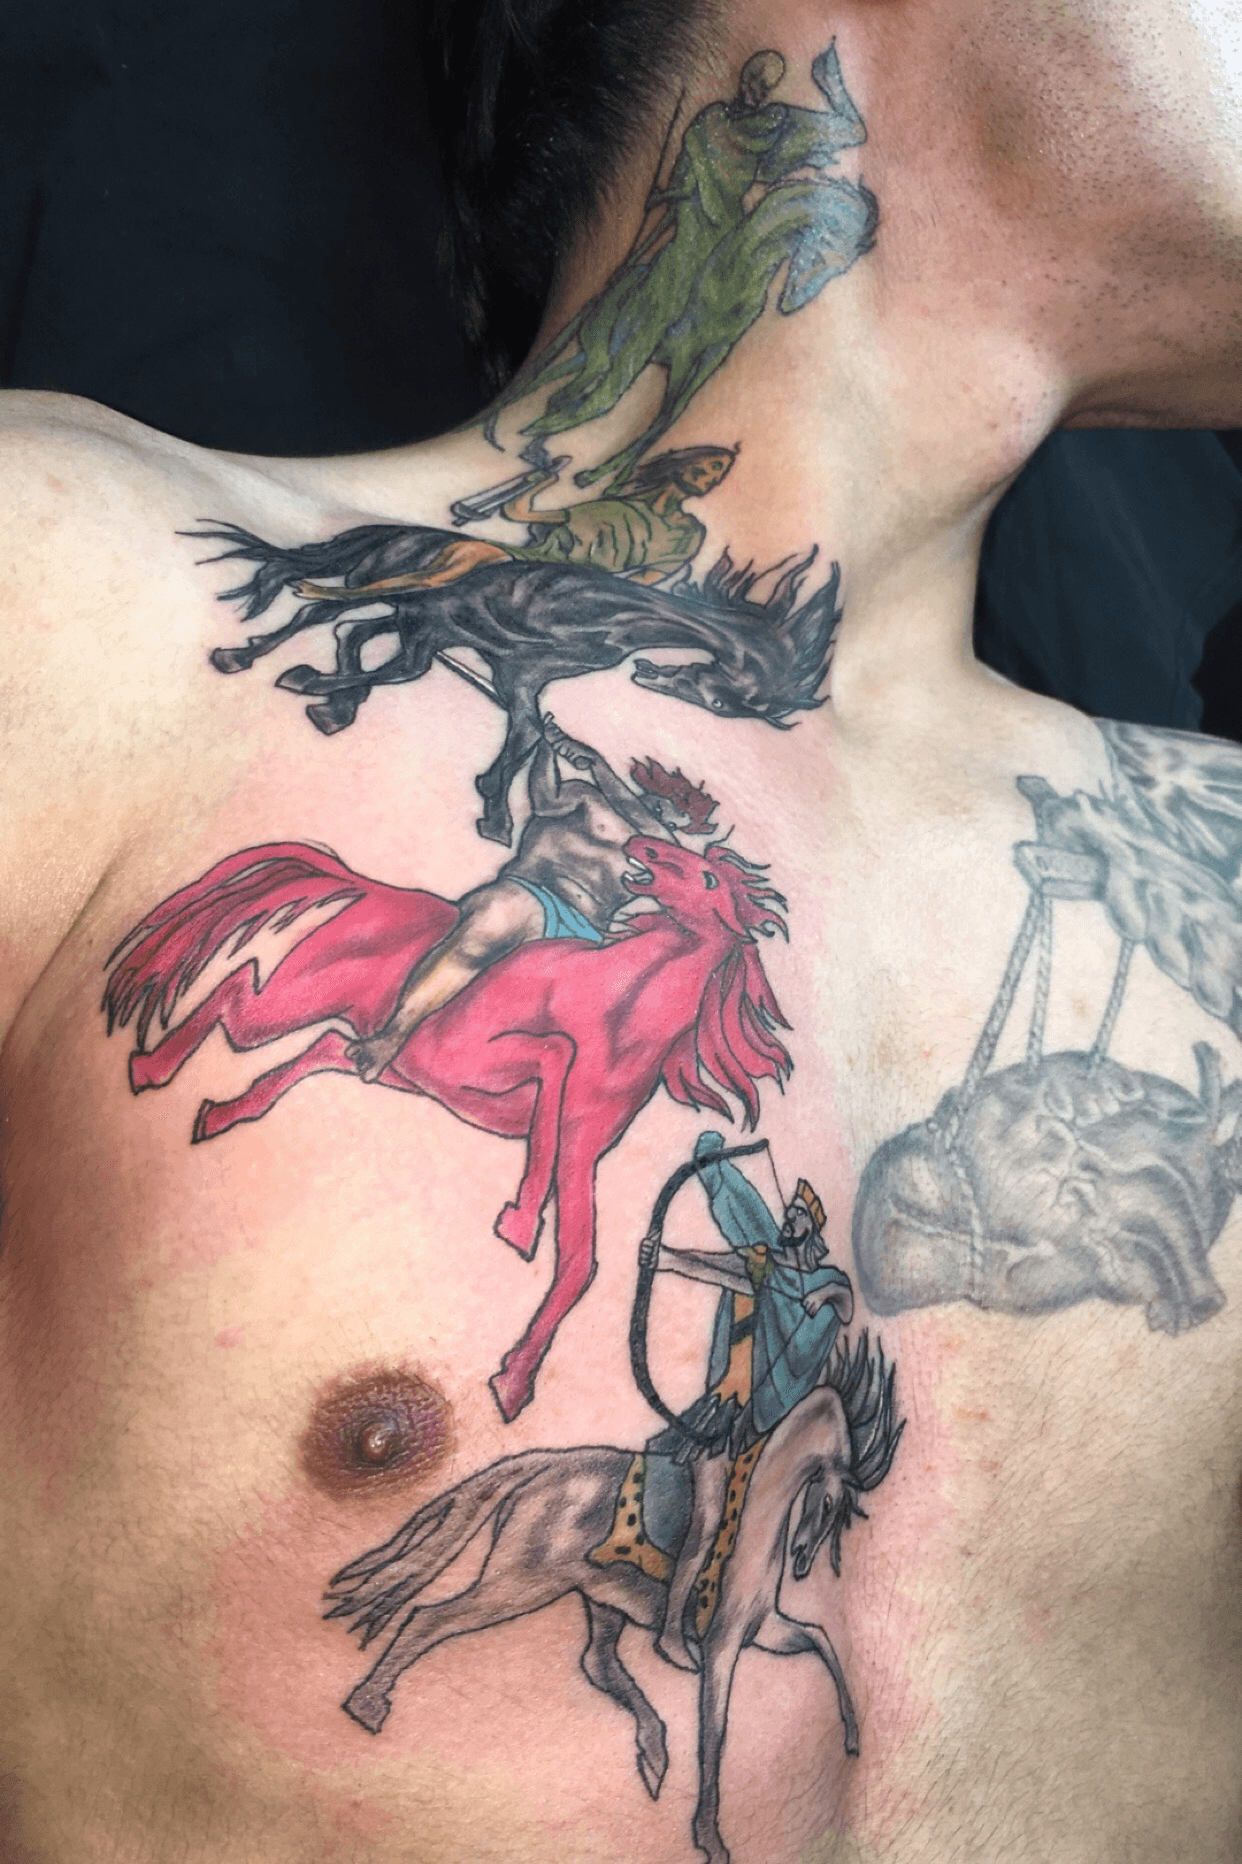 KellyKhamp on Twitter Progress on Four Horsemen Sleeve Paco at Graven  Image SantaClara CA tattoos ink pics httpstcobyf3egxyA1   Twitter